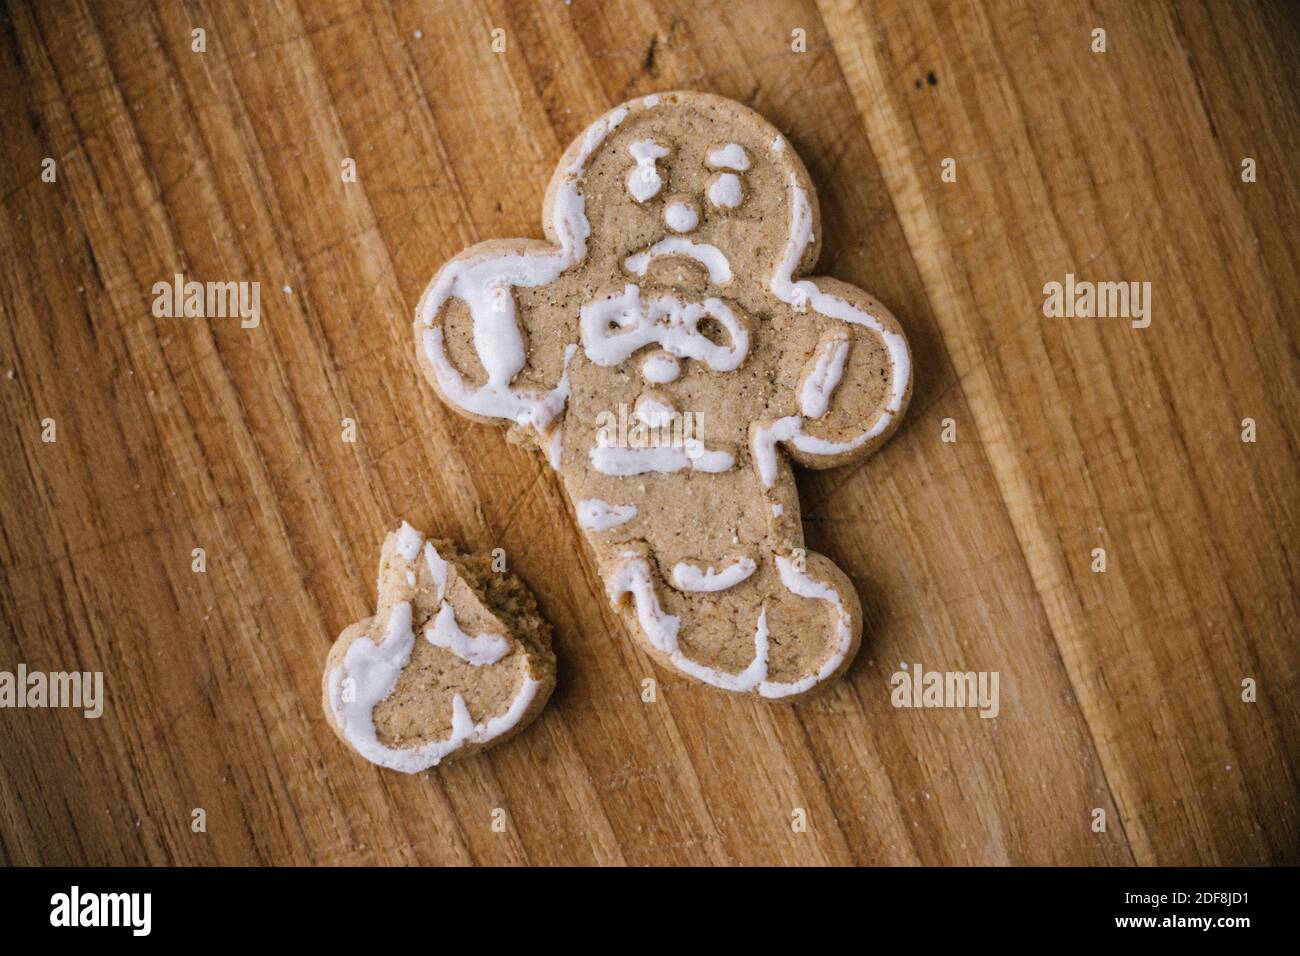 Broken Christmas Gingerbread Man Cookie On Wooden Board Stock Photo